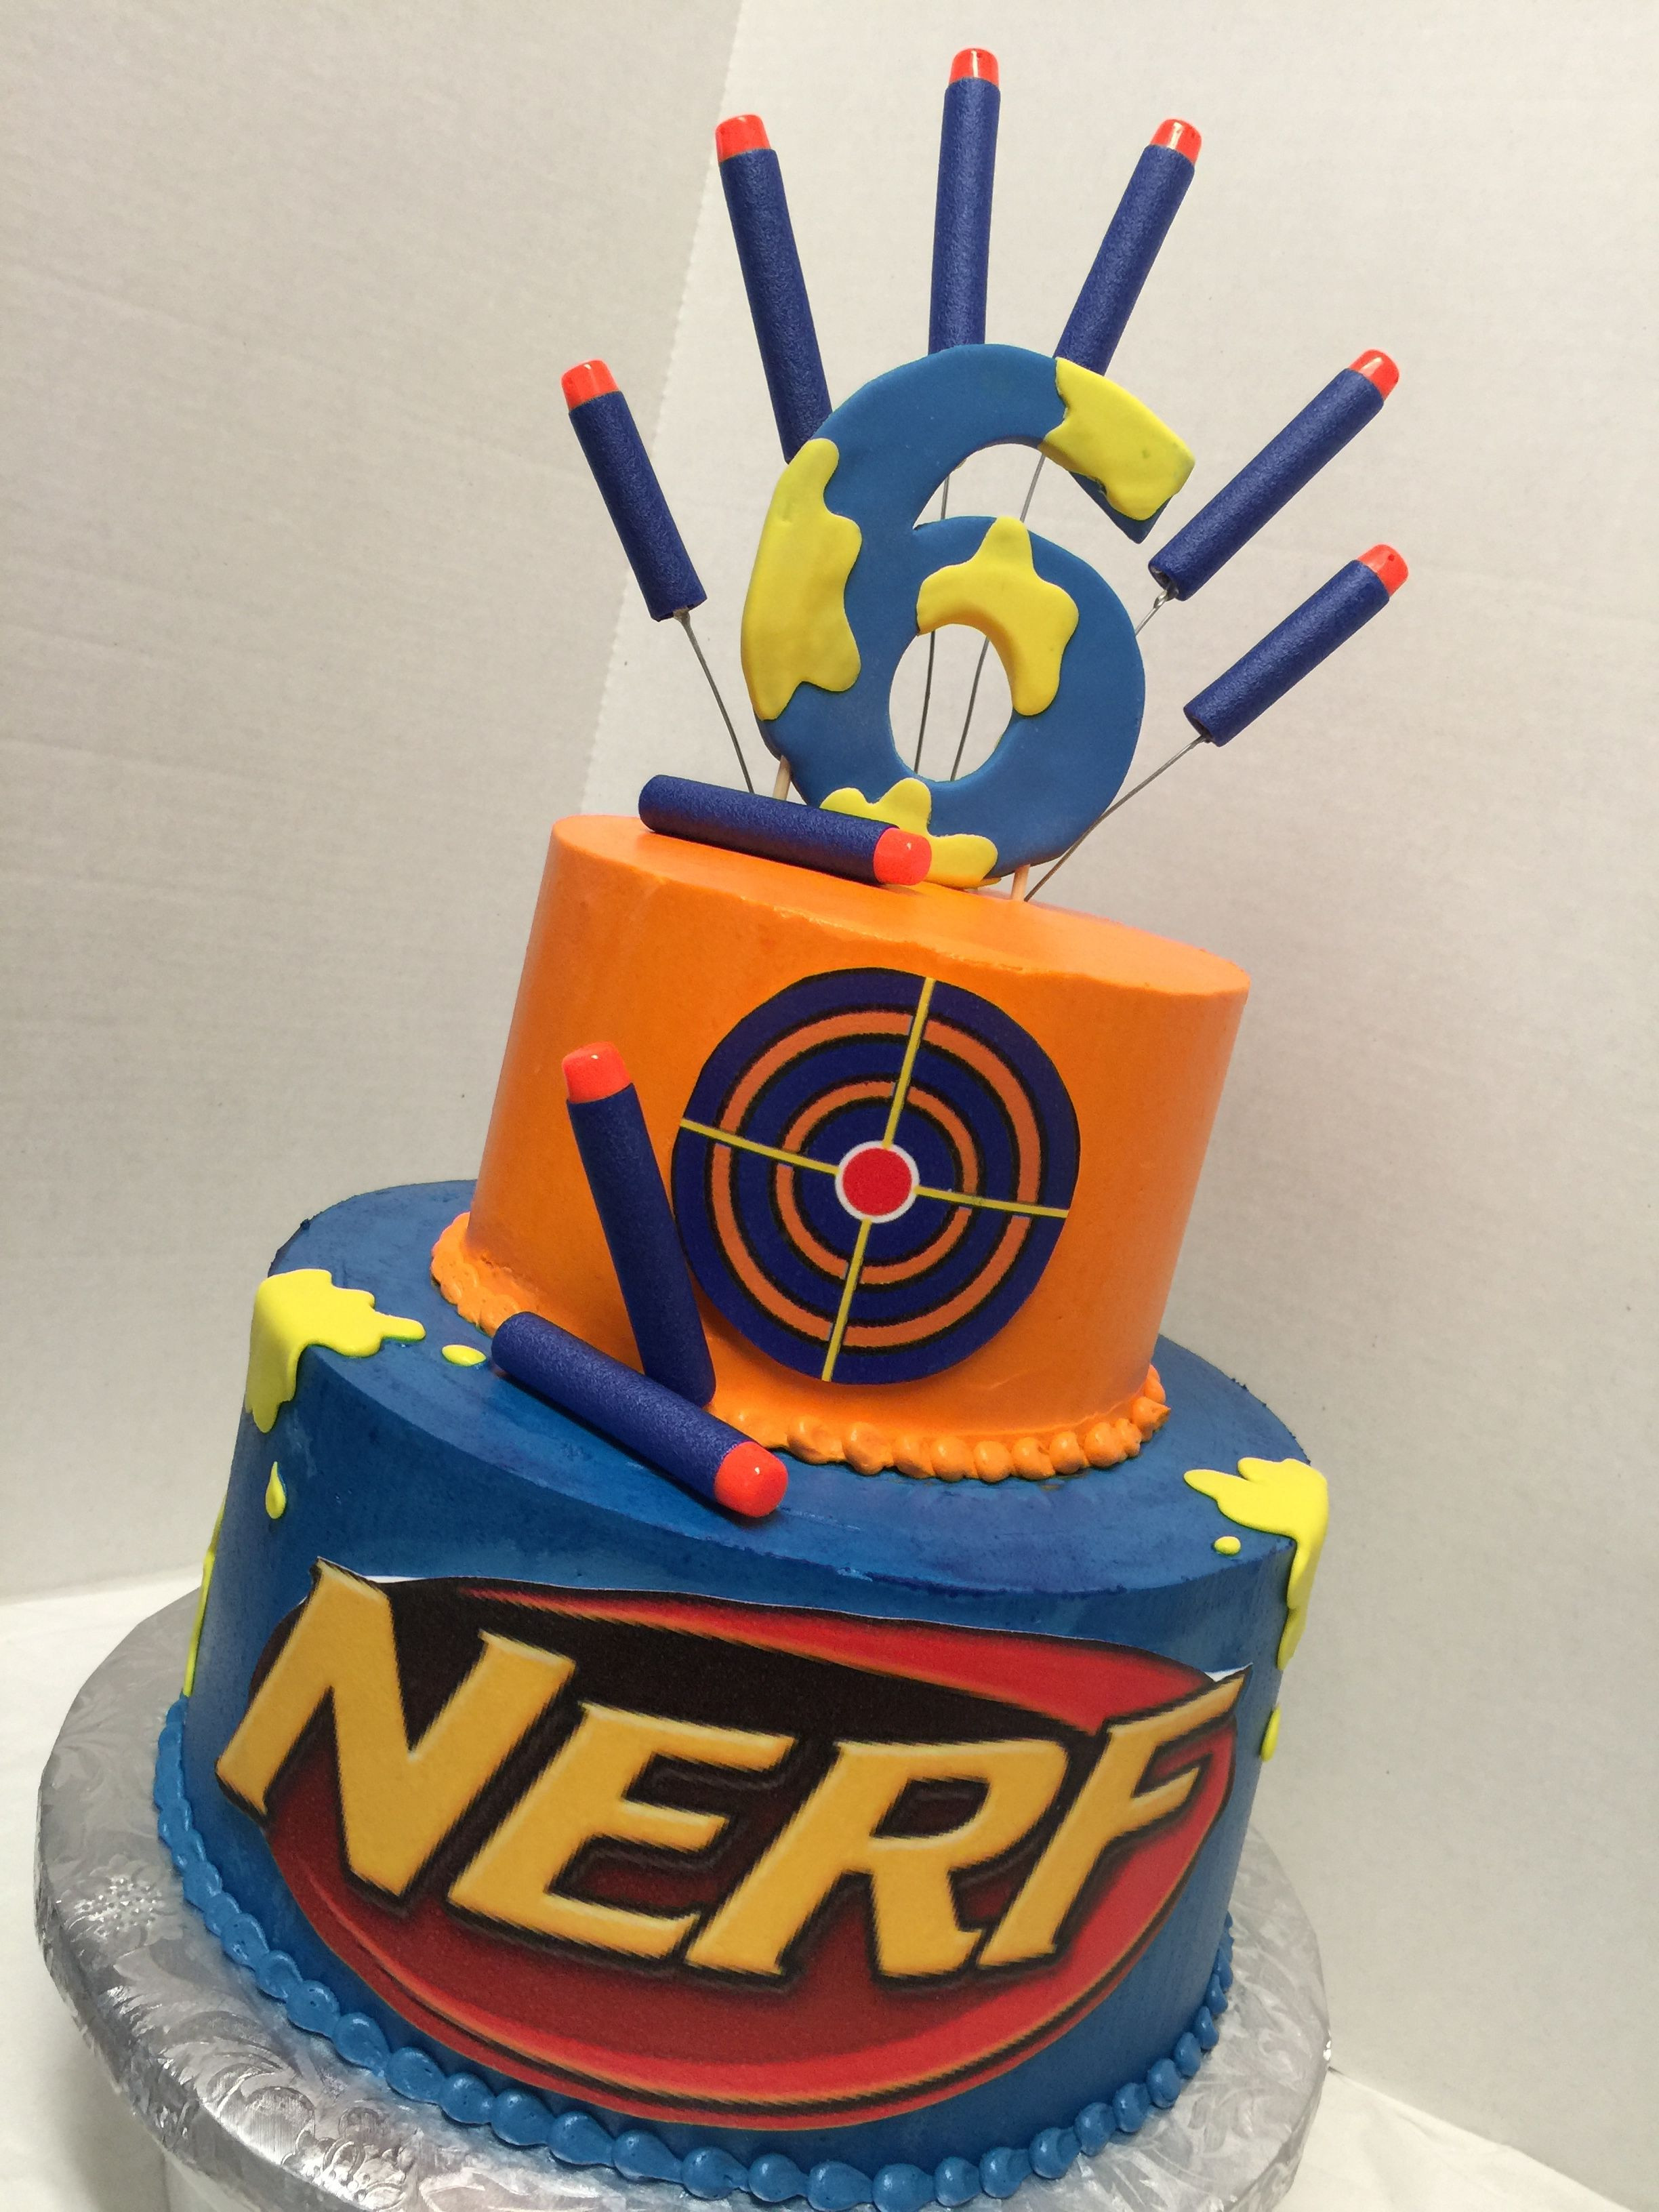 Best ideas about Nerf Gun Birthday Cake
. Save or Pin Nerf cake TDGCakes Now.